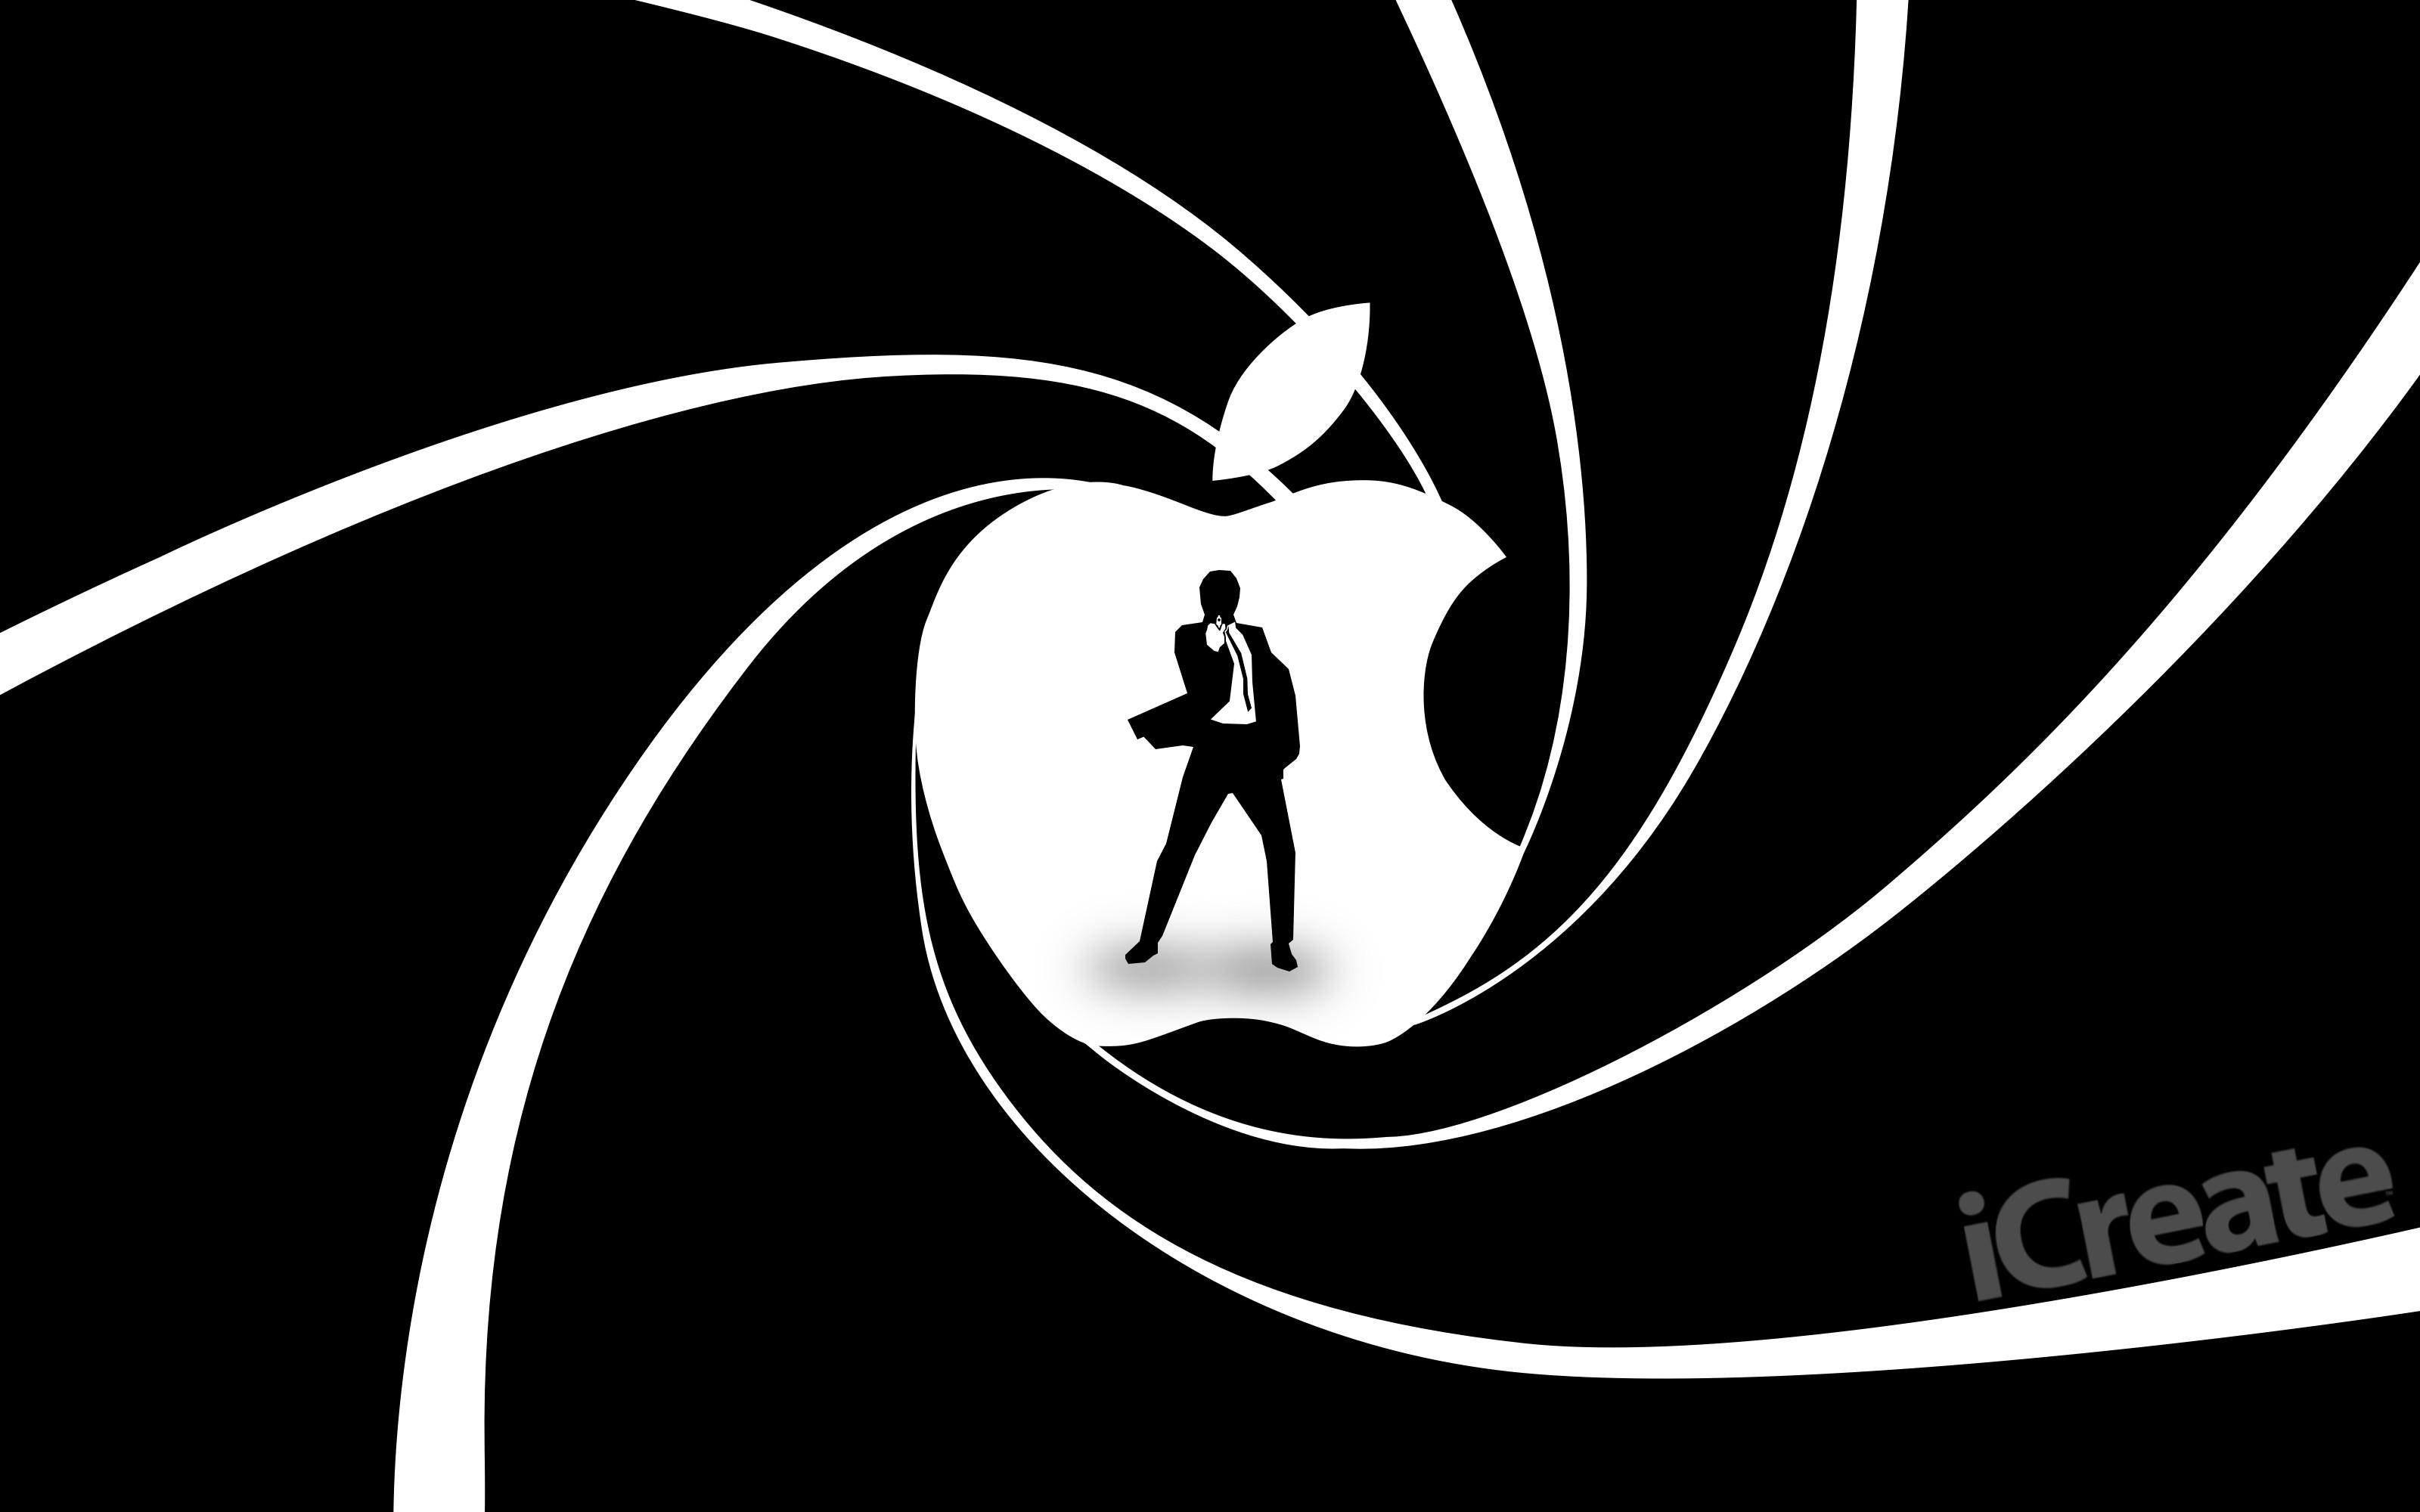 James Bond 007 Wallpaper background picture